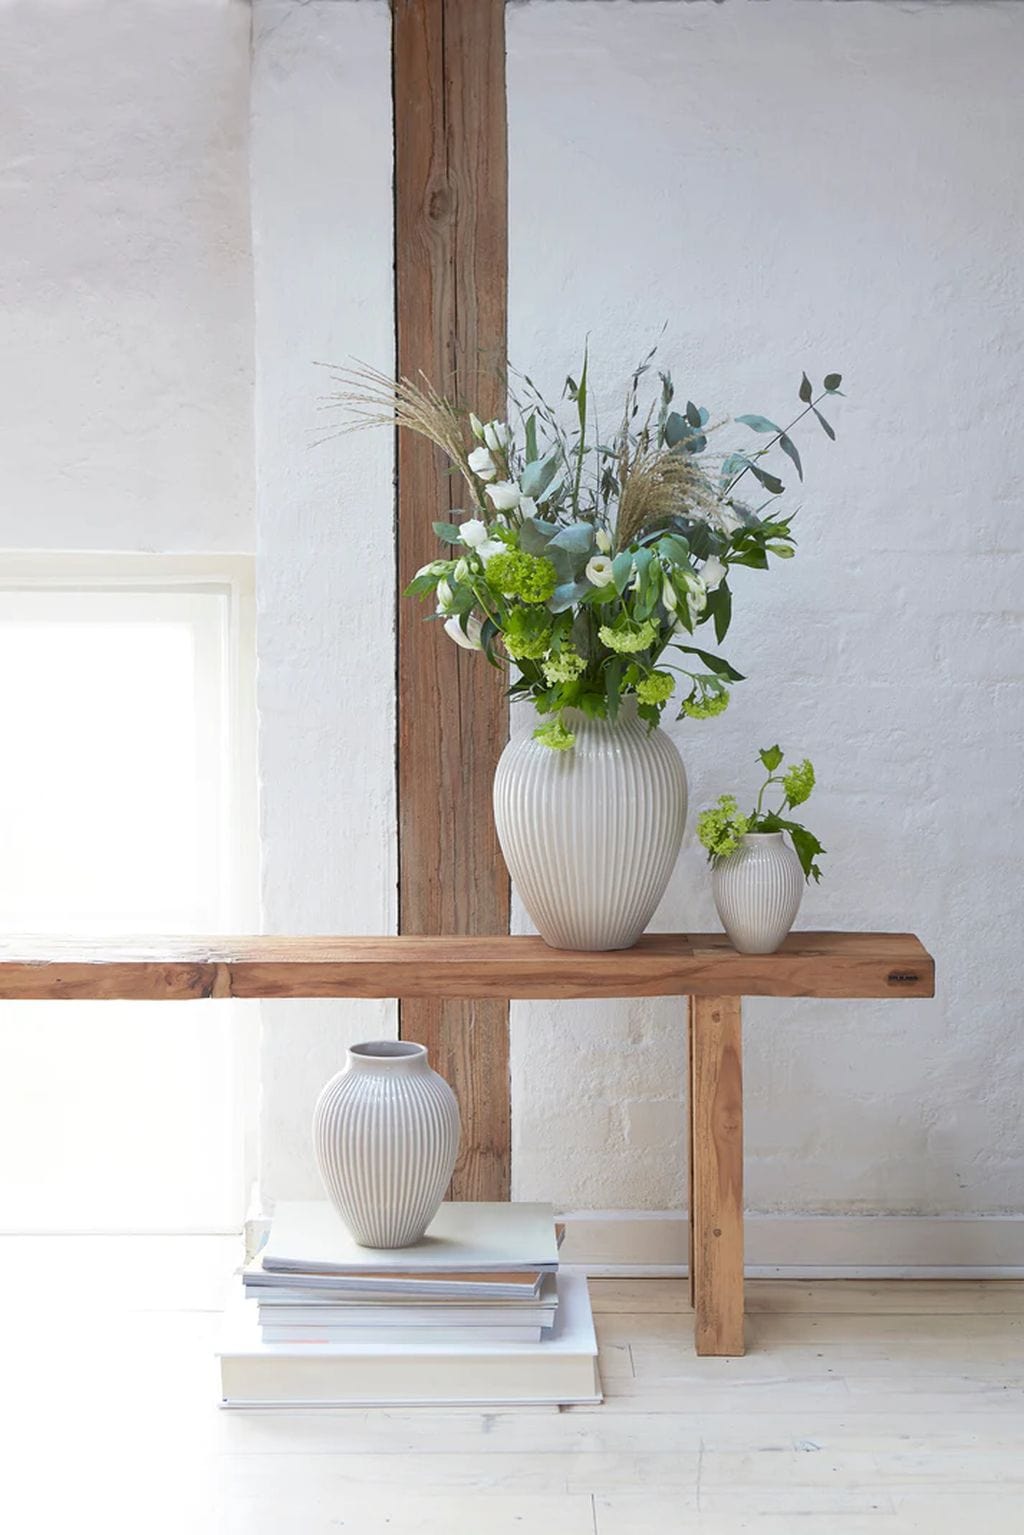 Knabstrup Keramik Vase With Grooves H 12,5 Cm, Grey